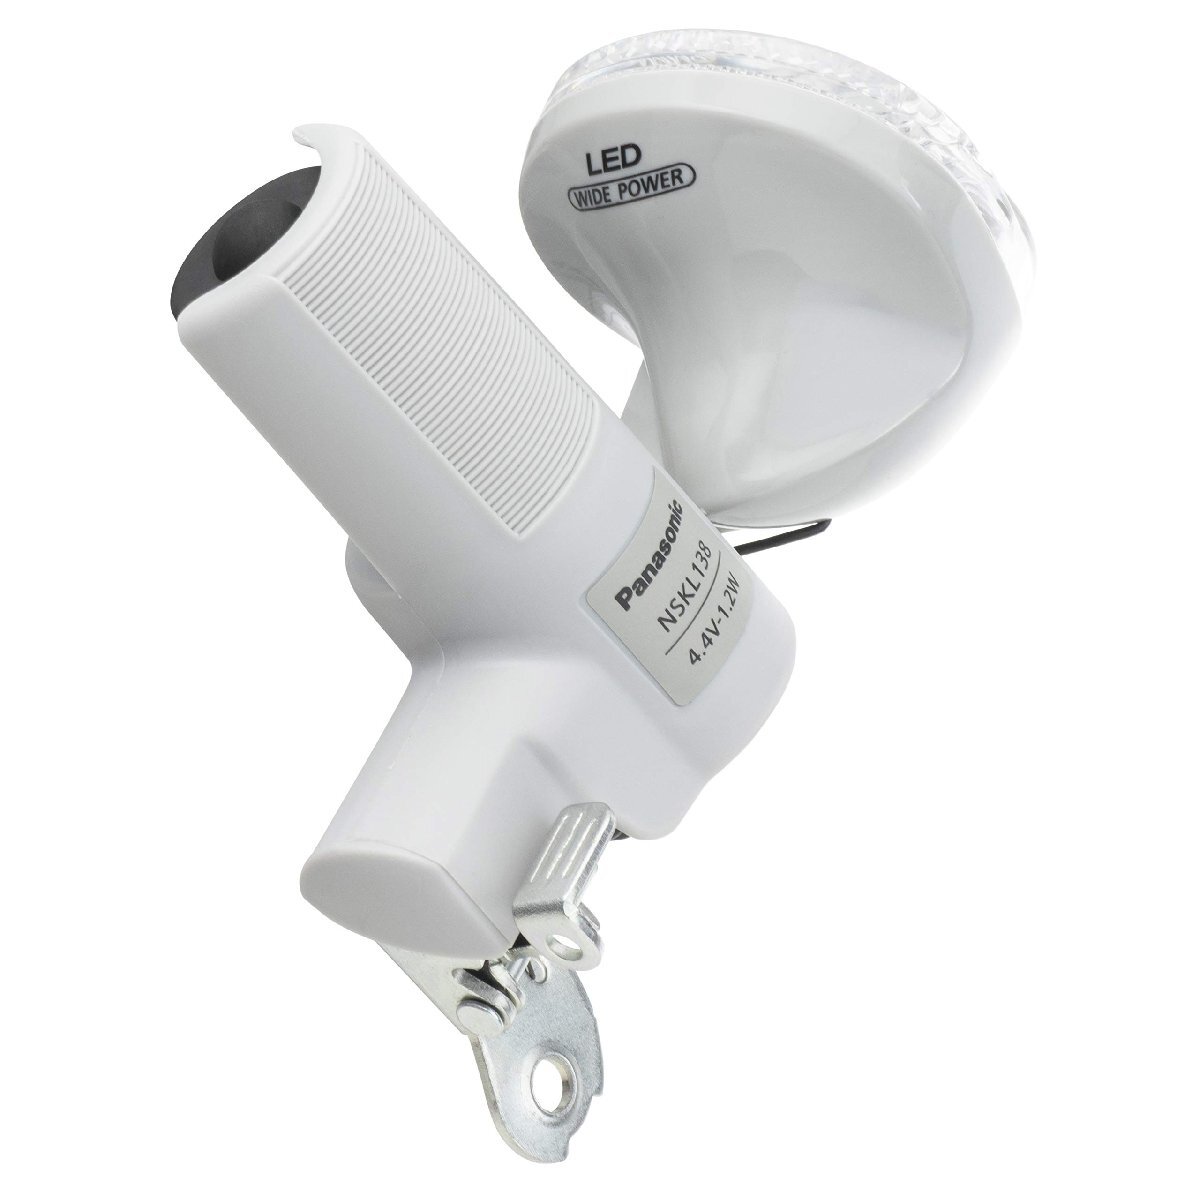  Panasonic (Panasonic) LED departure electro- lamp wide LED bicycle gray W58×D128×H105mm NSKL138-N